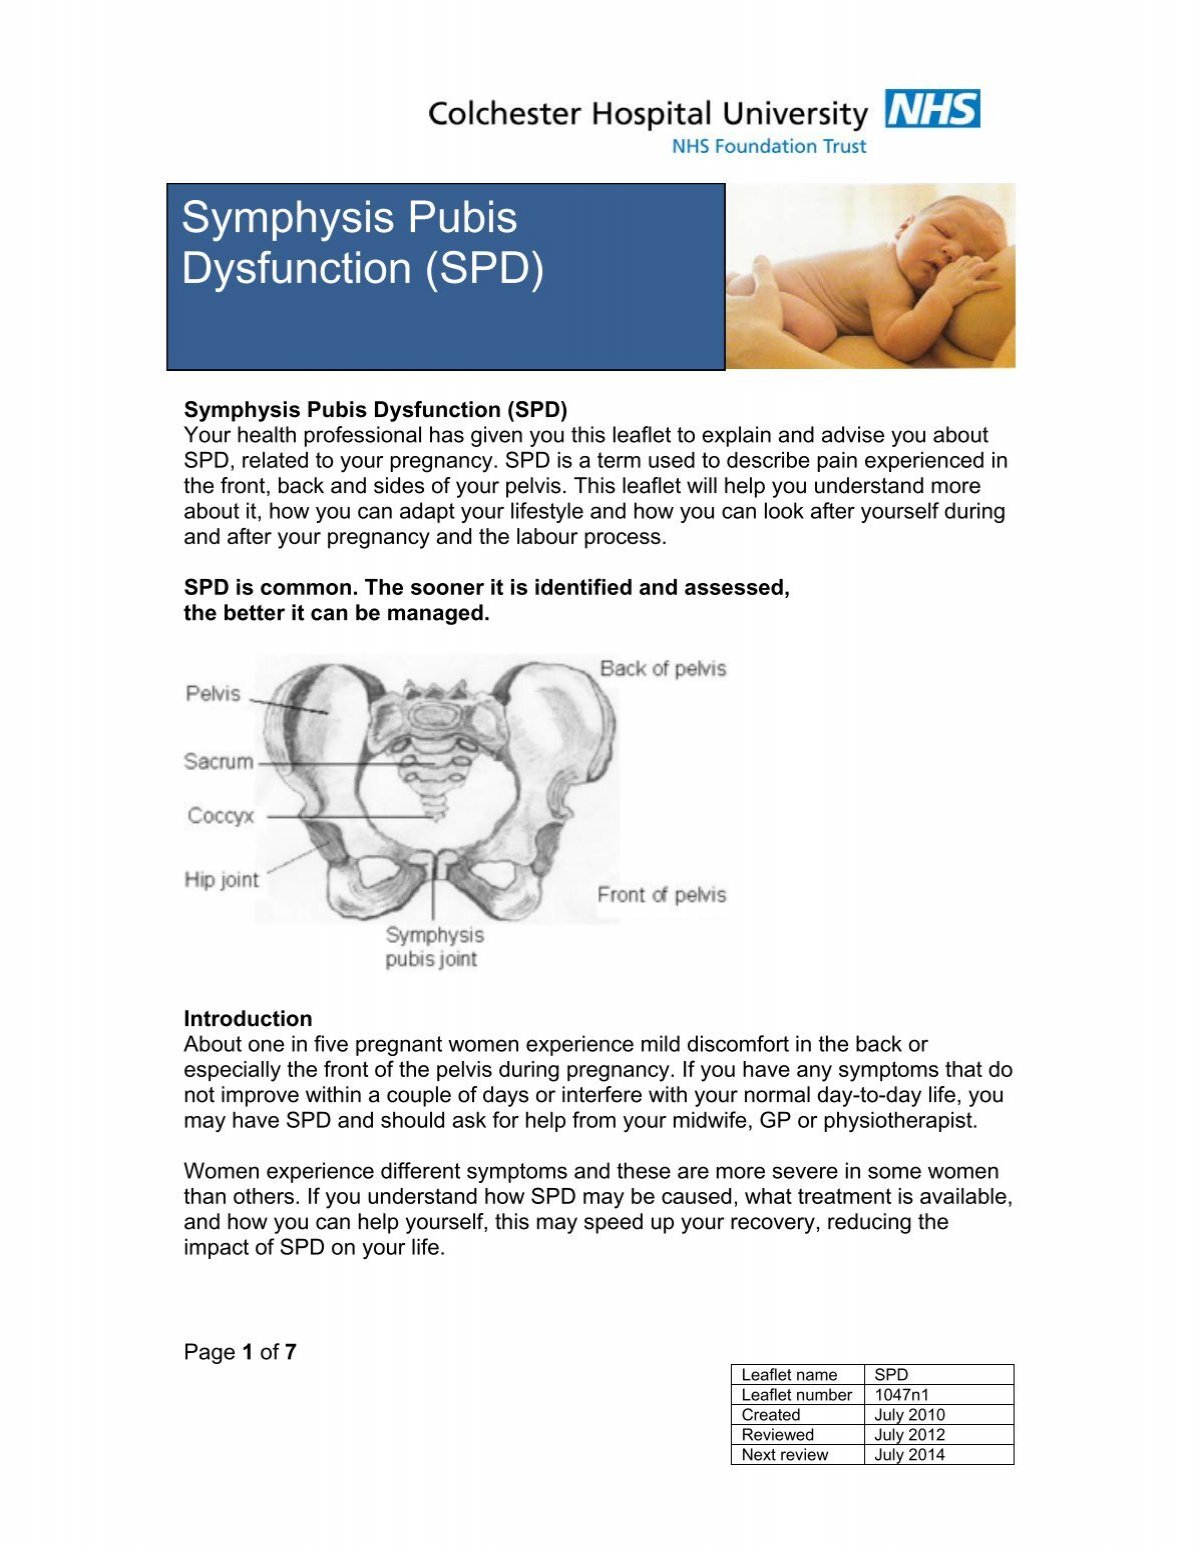 Symphysis Pubis Dysfunction - Colchester Hospital University NHS